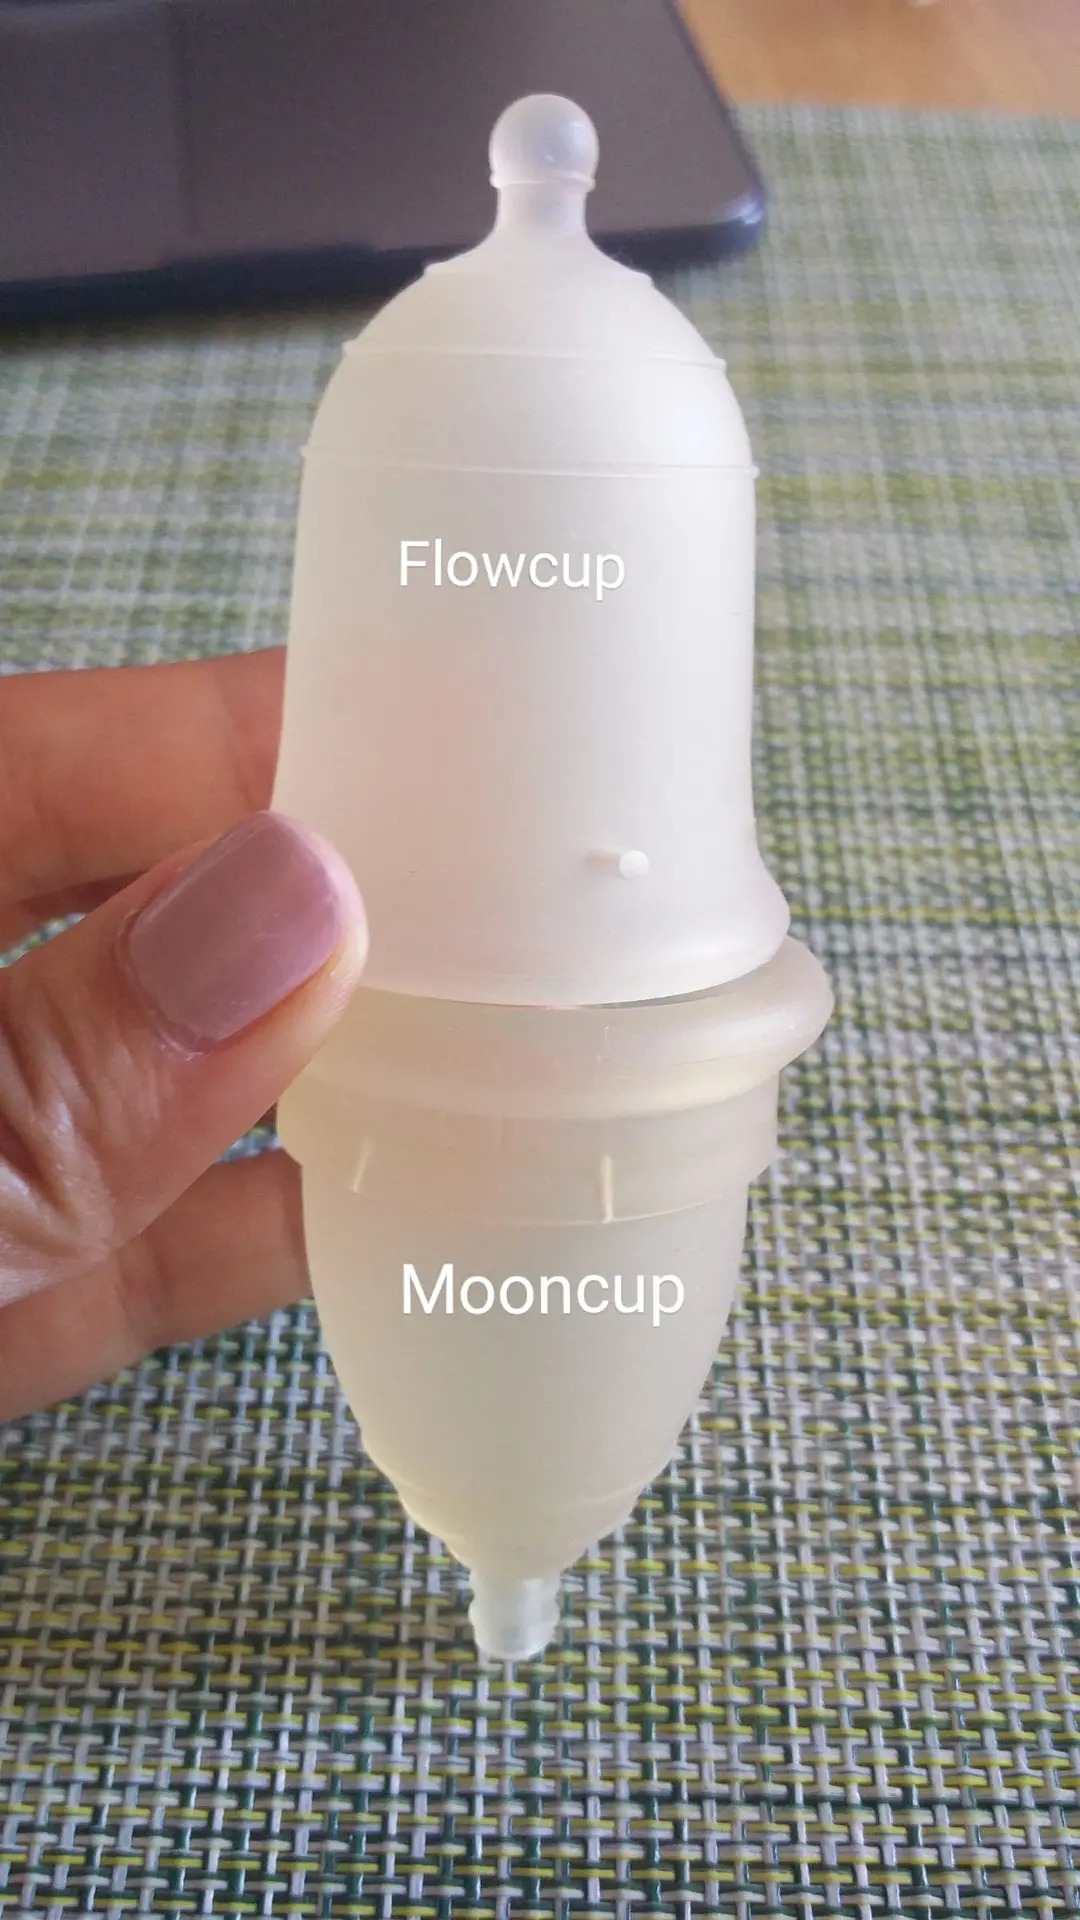 flowcup vs mooncup